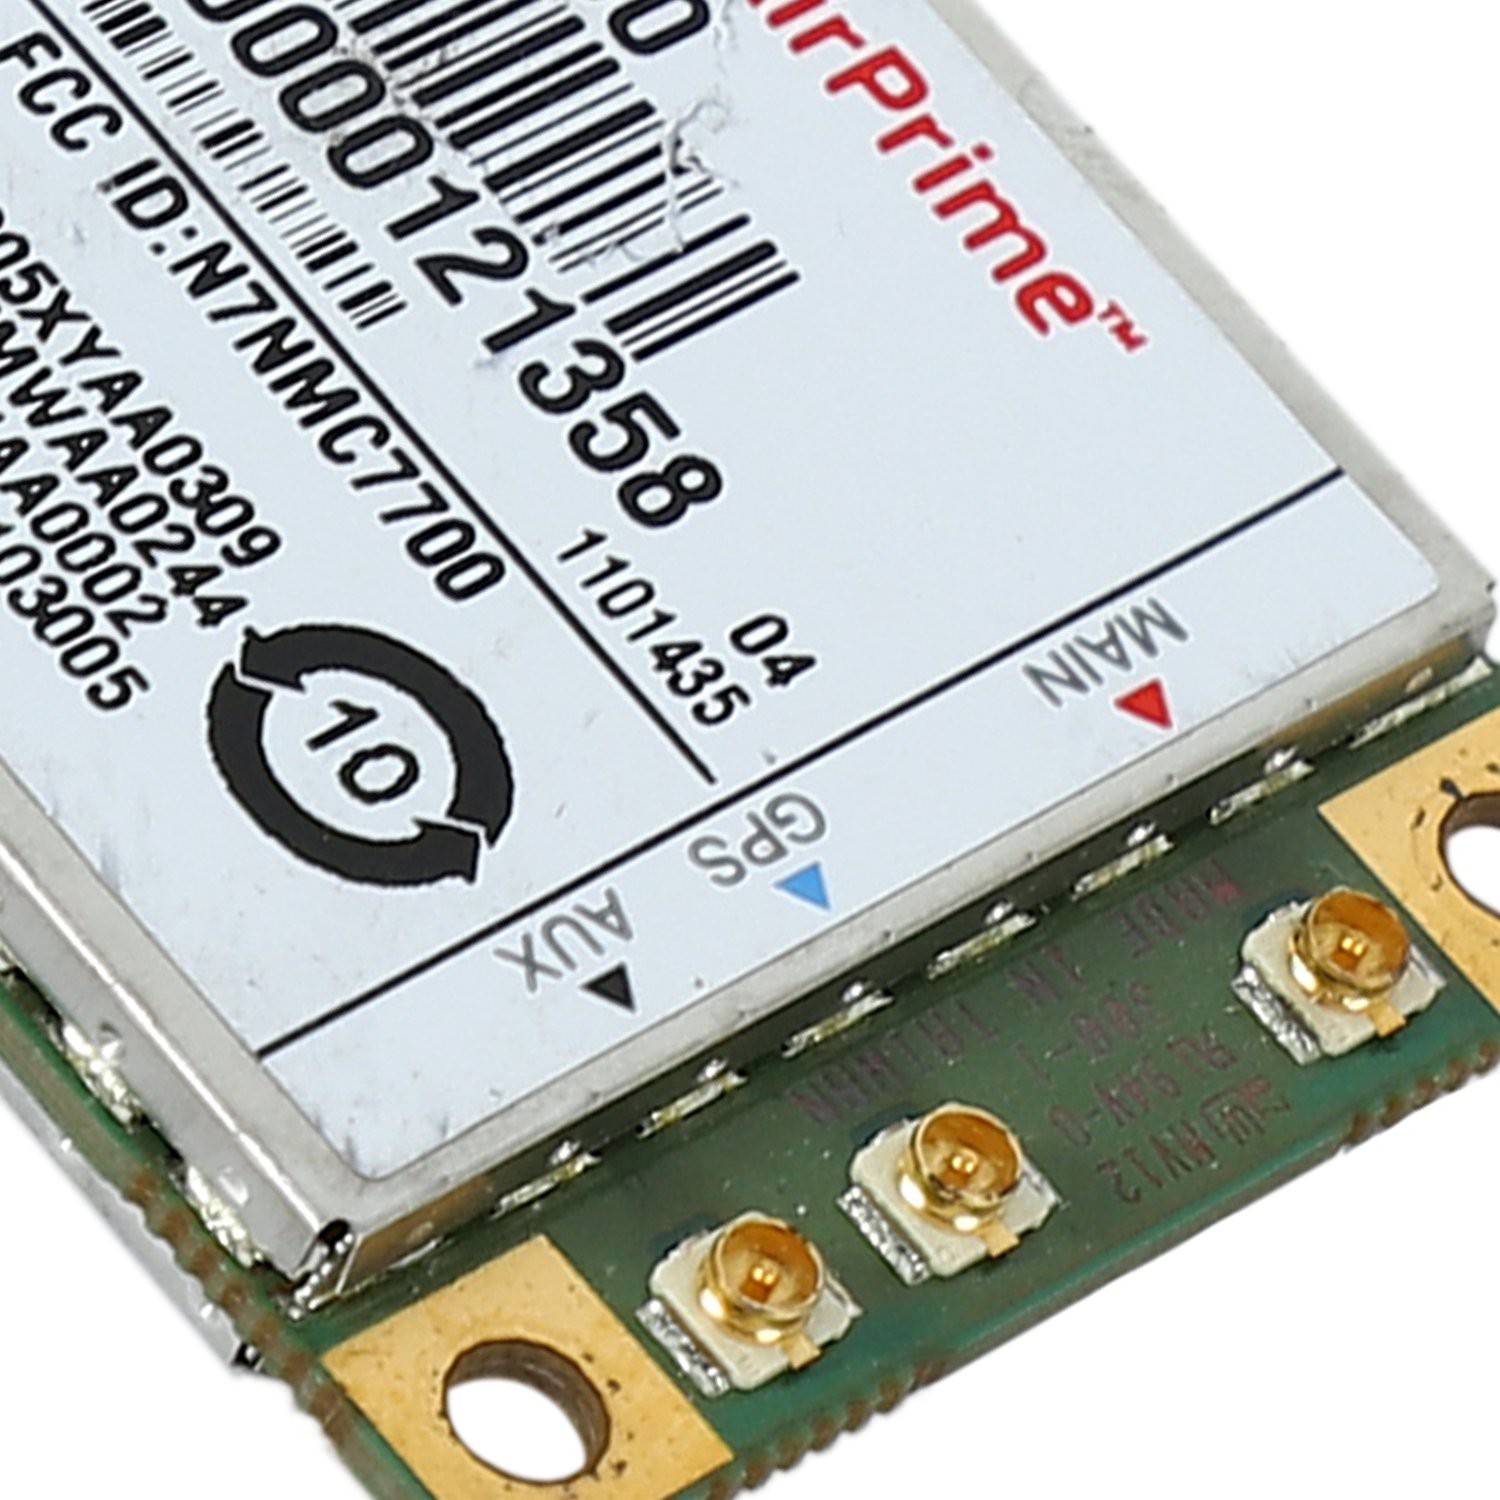 Unlocked MC7700 3G/4G WWAN Card for Sierra AirPrime,100Mbps 4G/3G LTE/FDD/WCDMA/Edge GPS ule for Windows/Linux